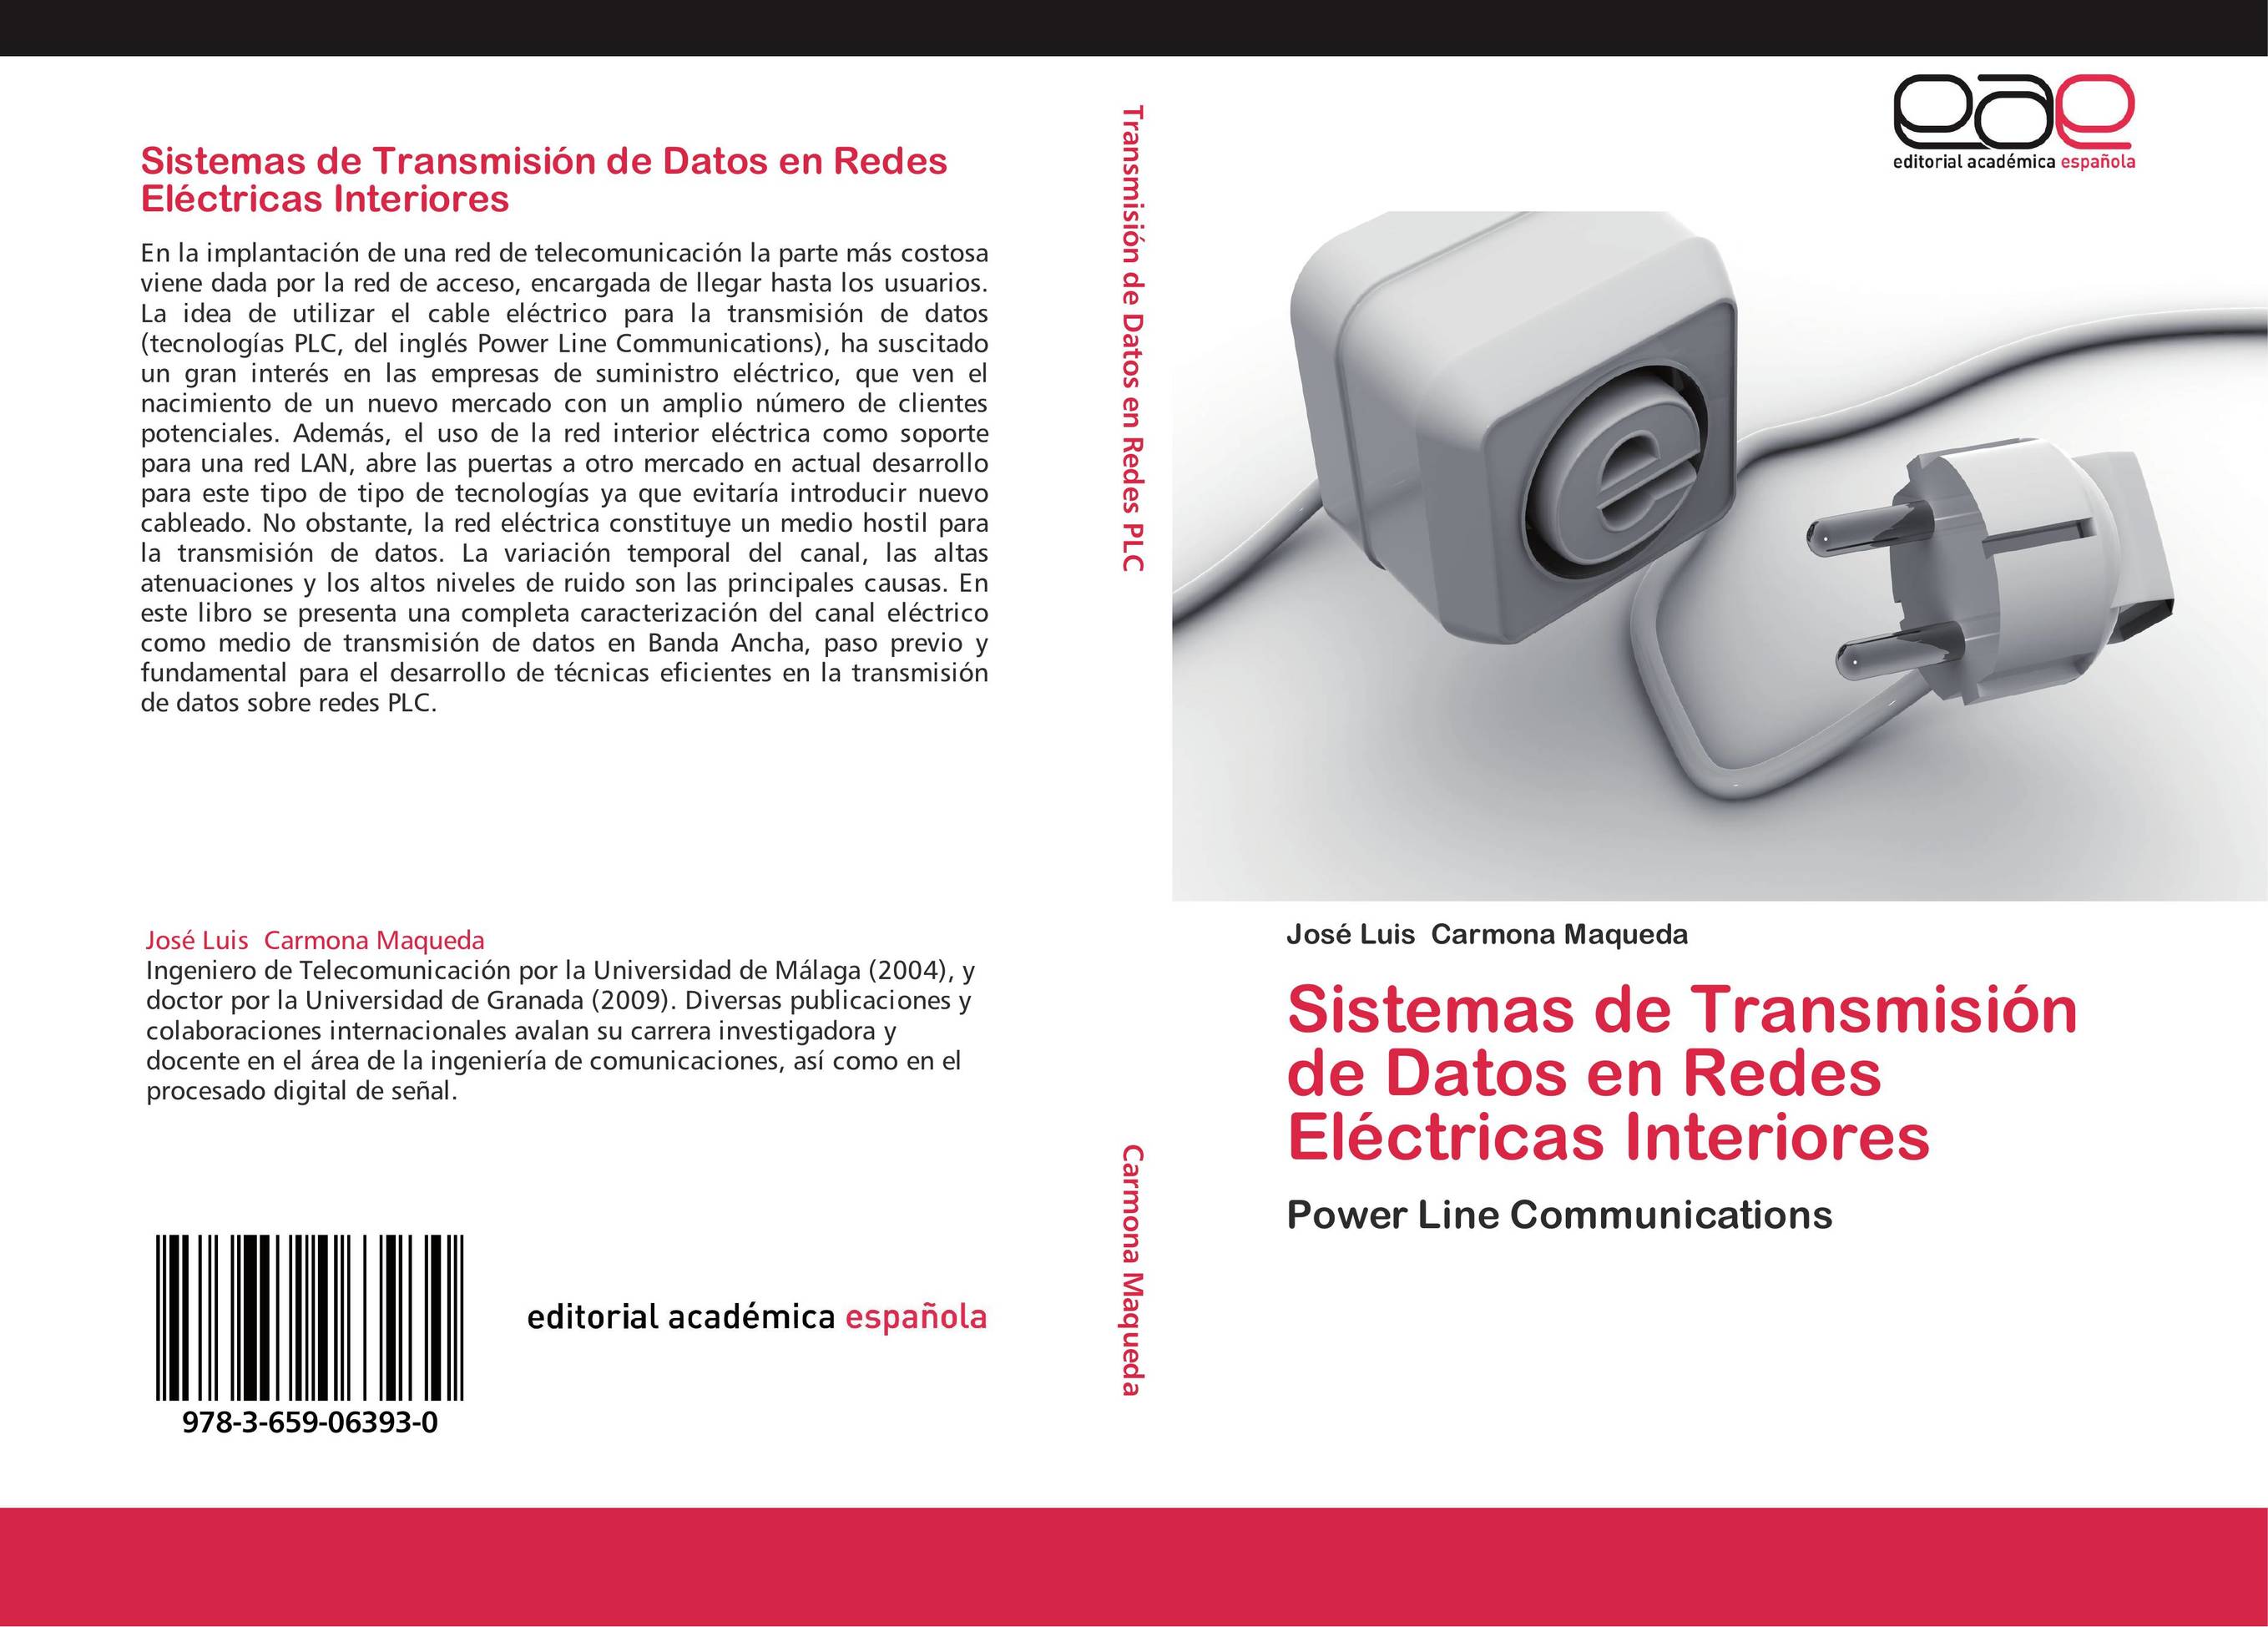 Sistemas de Transmisión de Datos en Redes Eléctricas Interiores